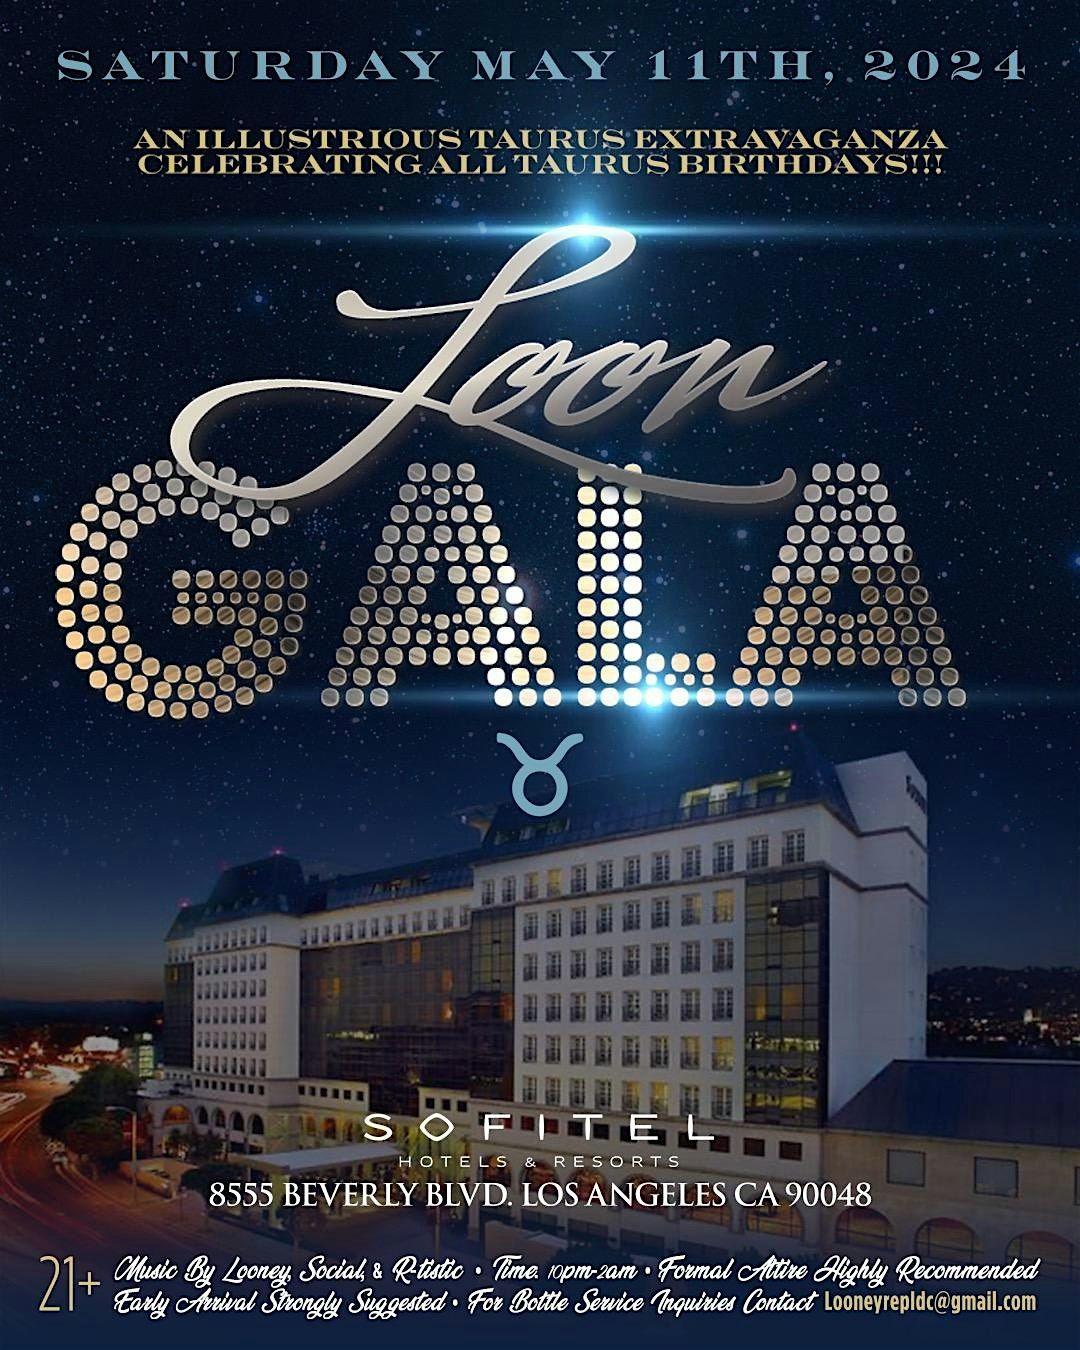 The Loon Gala